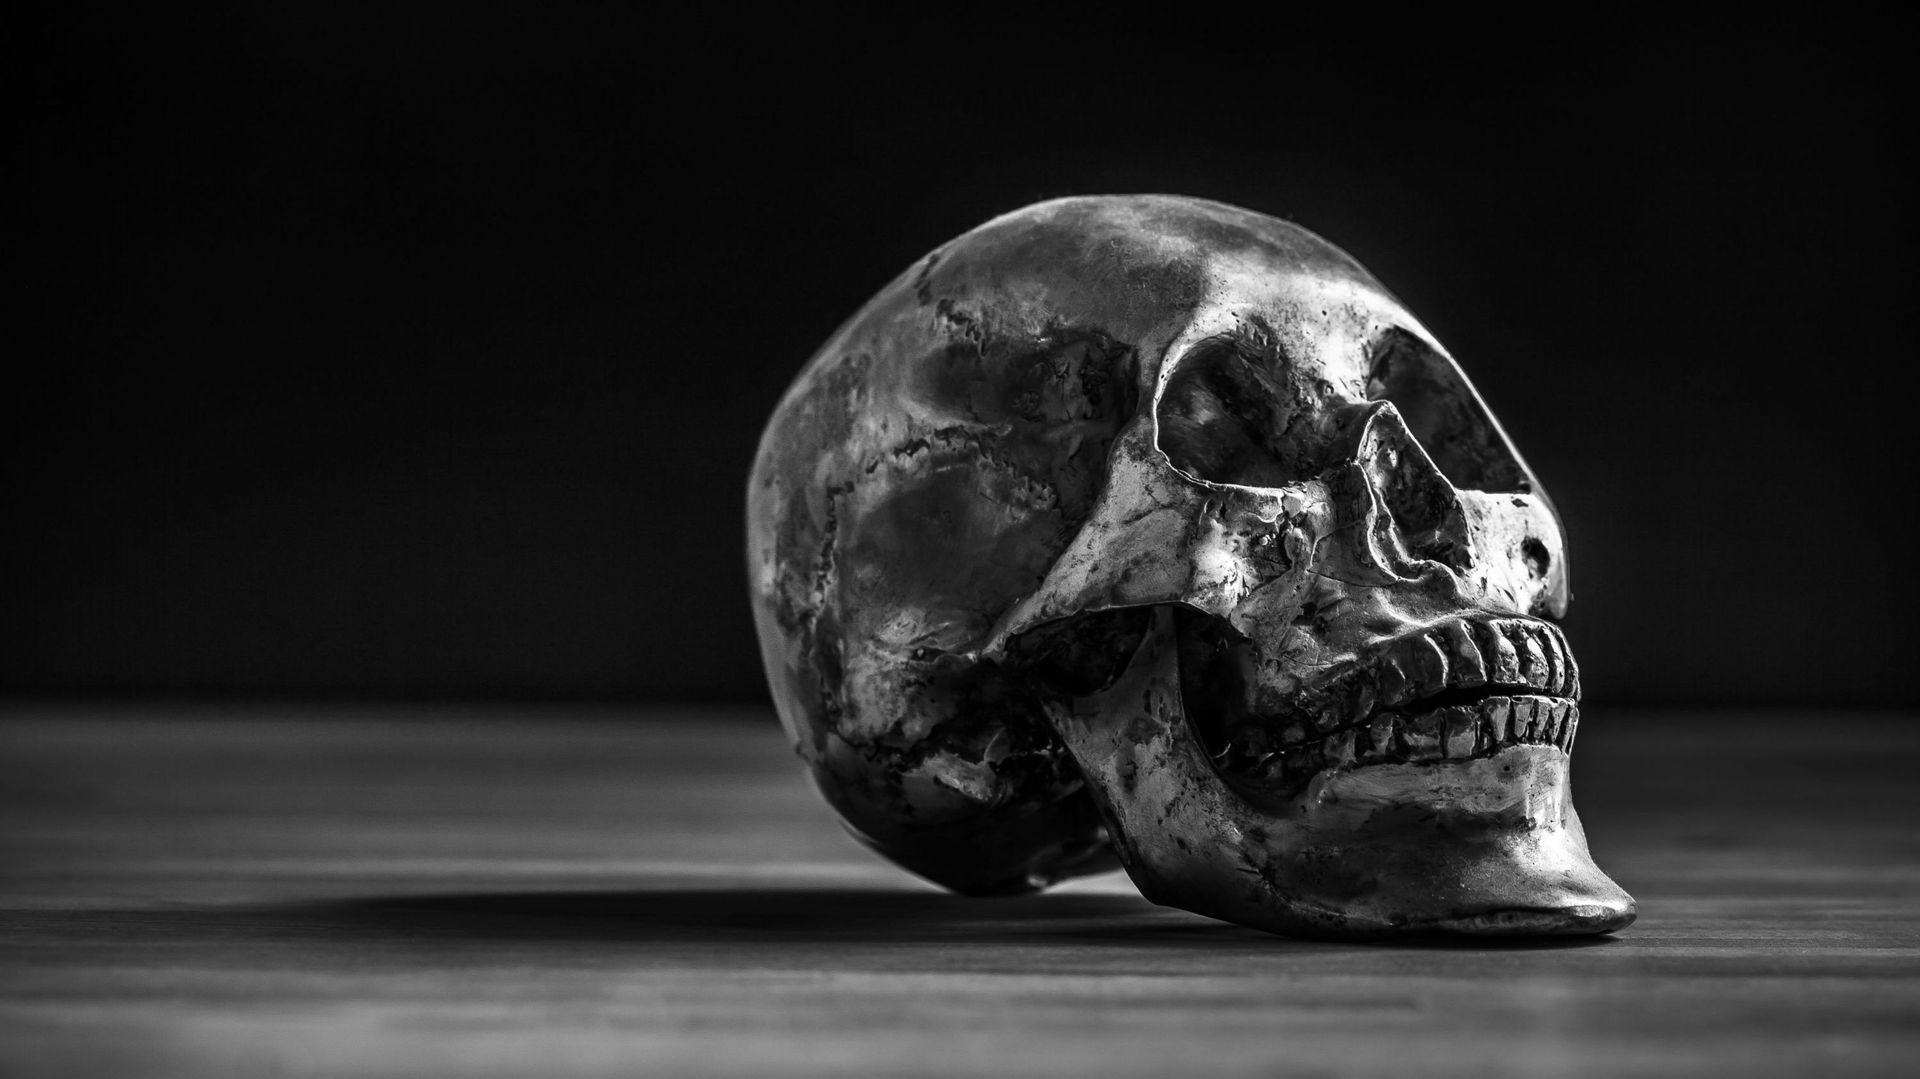 Silver Skull in Black and White